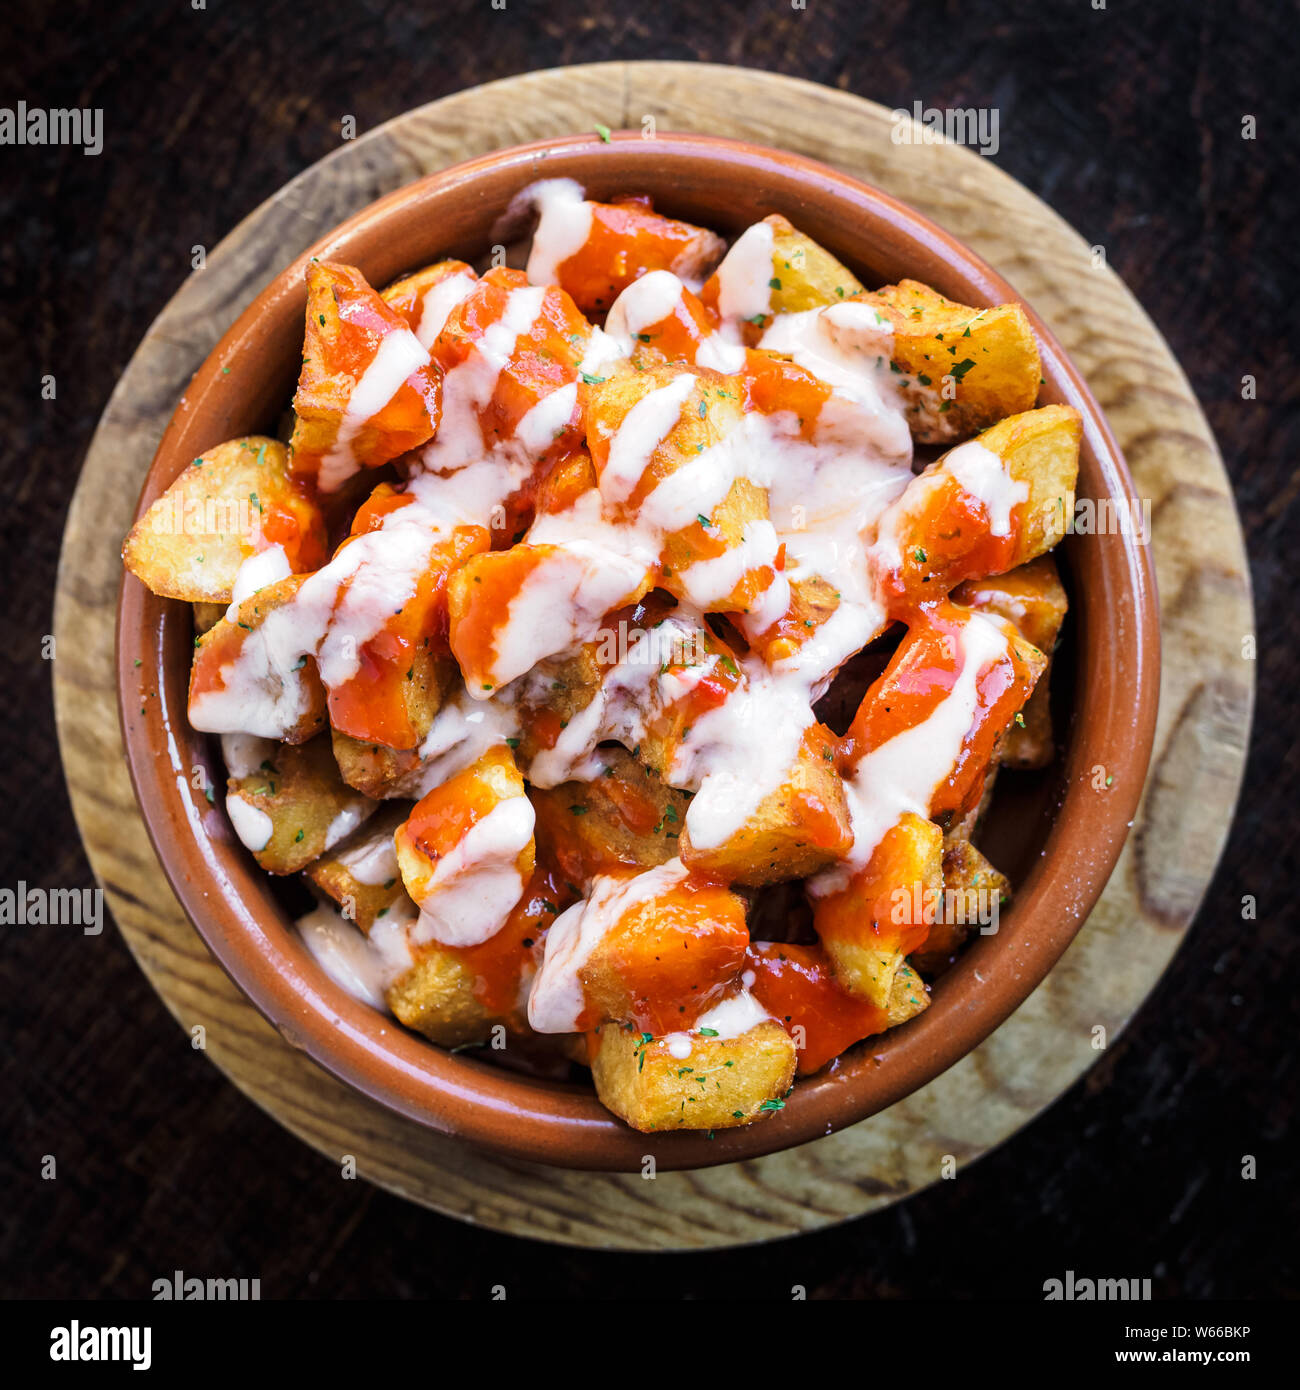 Spanish potatoes patatas bravas for tapas with tomato and spicy sauce on a bowl Stock Photo